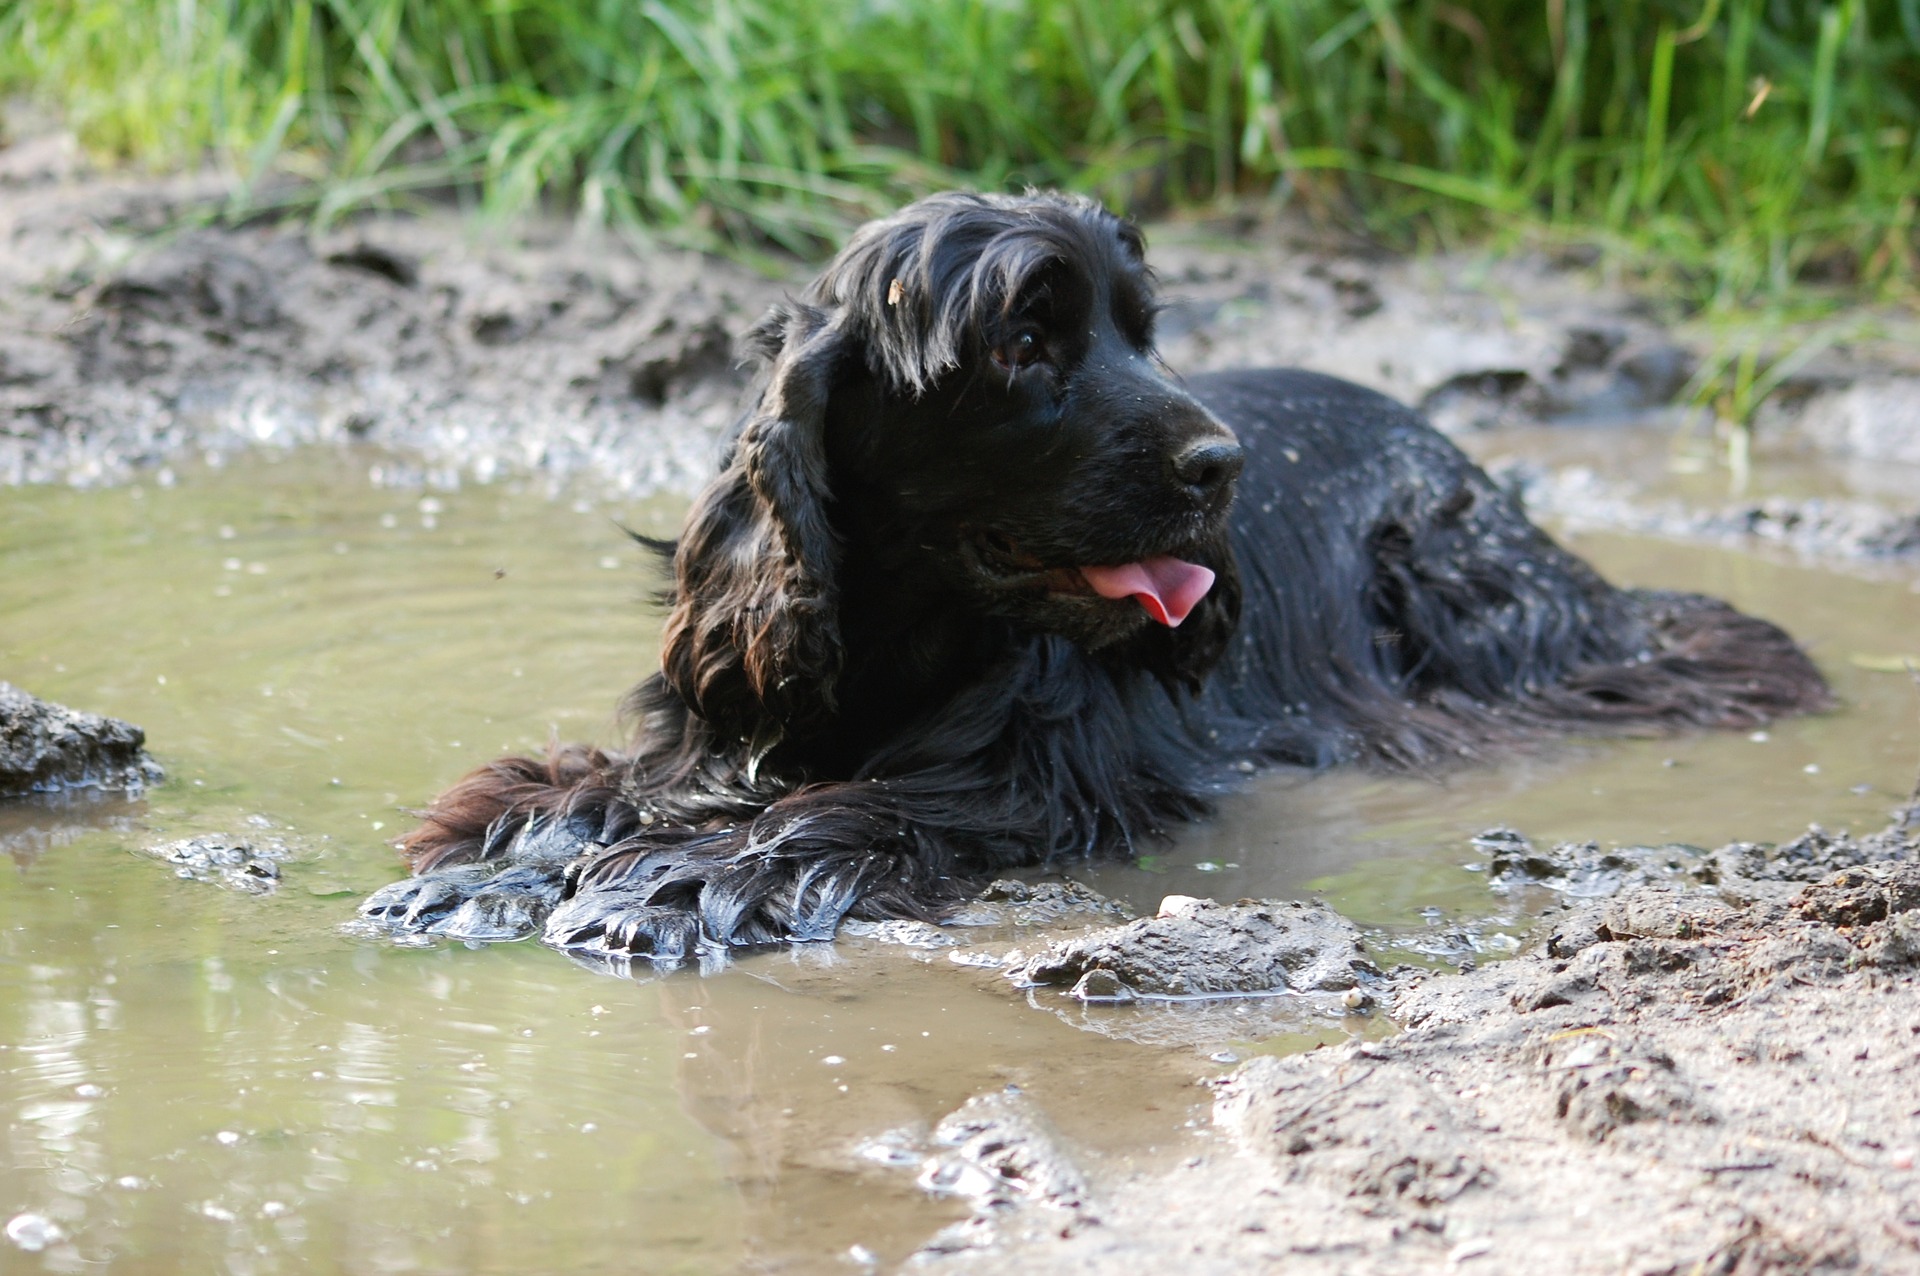 Muddy wet dog